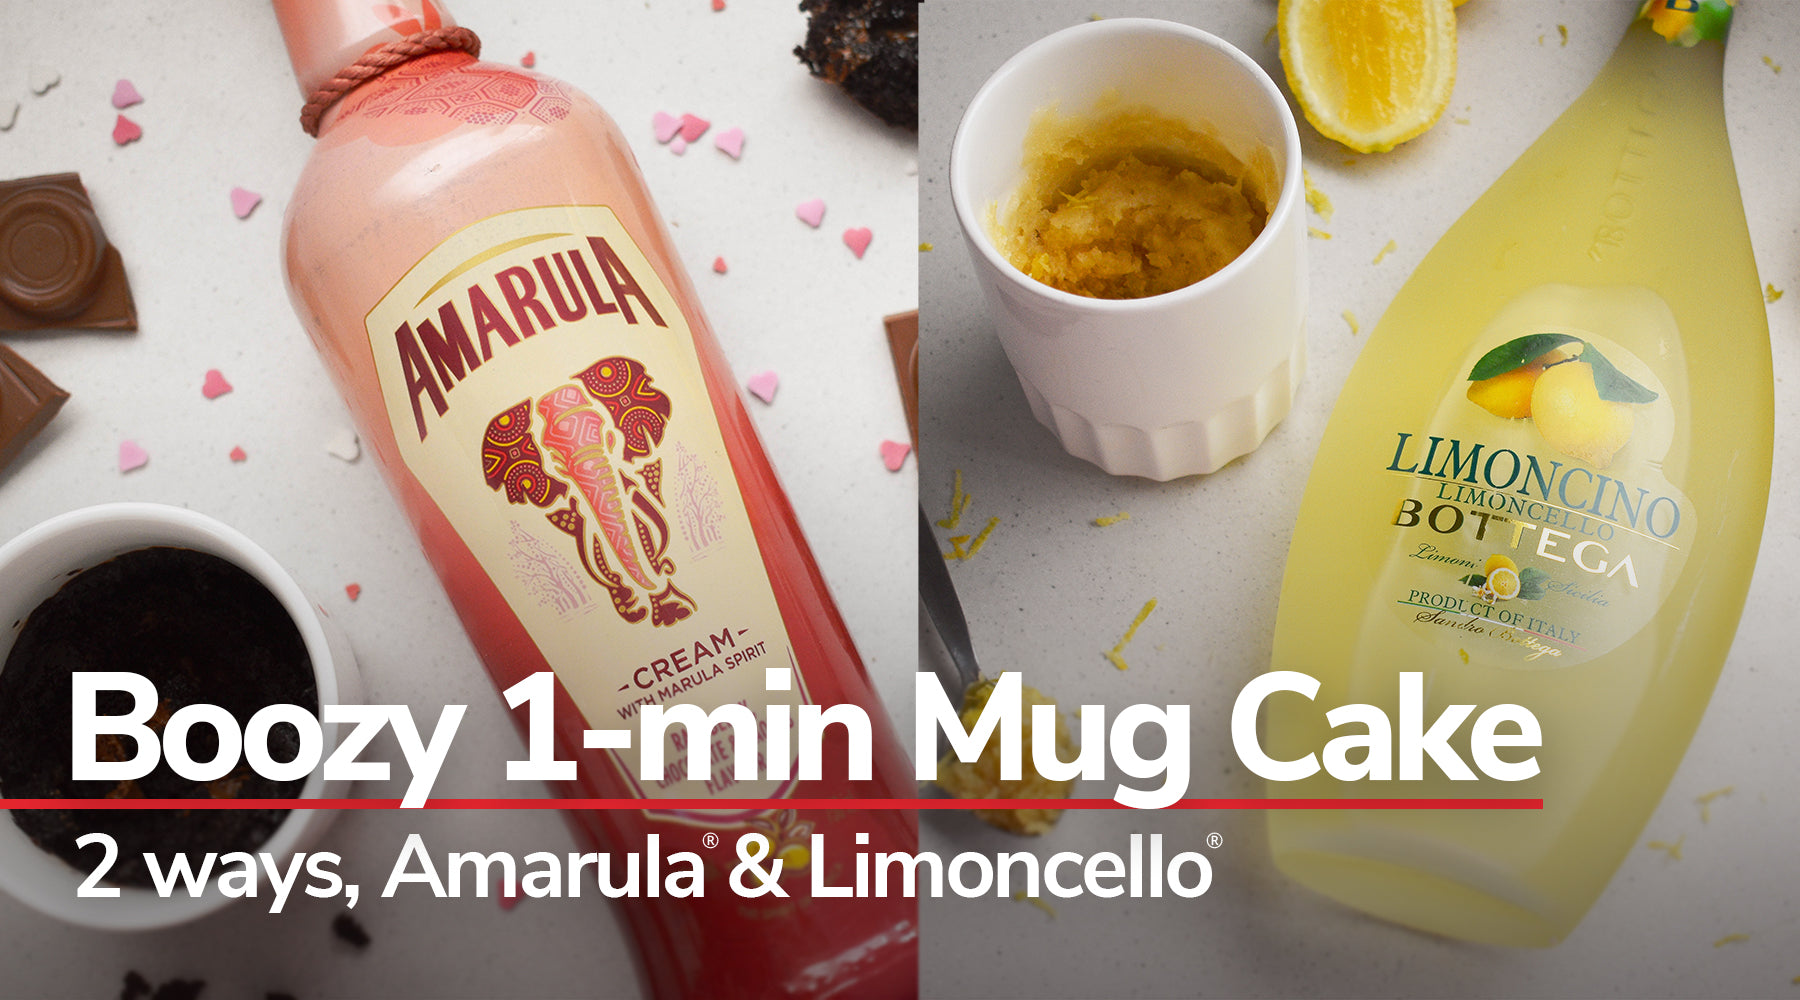 1-min Mug Cake in Amarula Raspberry Chocolate & African Baobab and Limoncino Limoncello Bottega